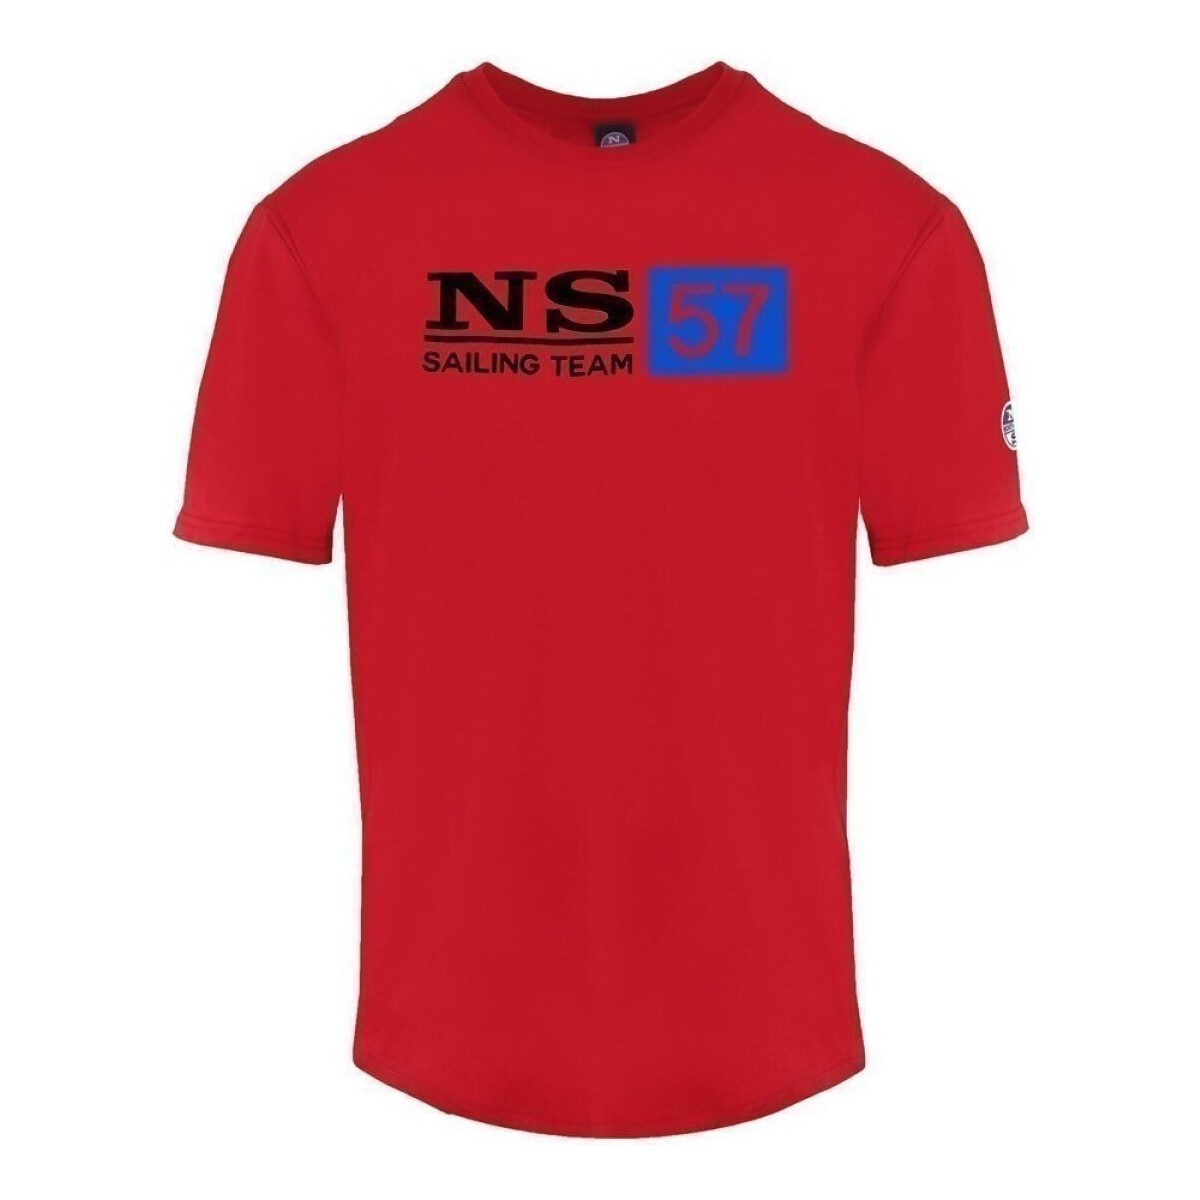 textil Herr T-shirts North Sails 9024050230 Röd